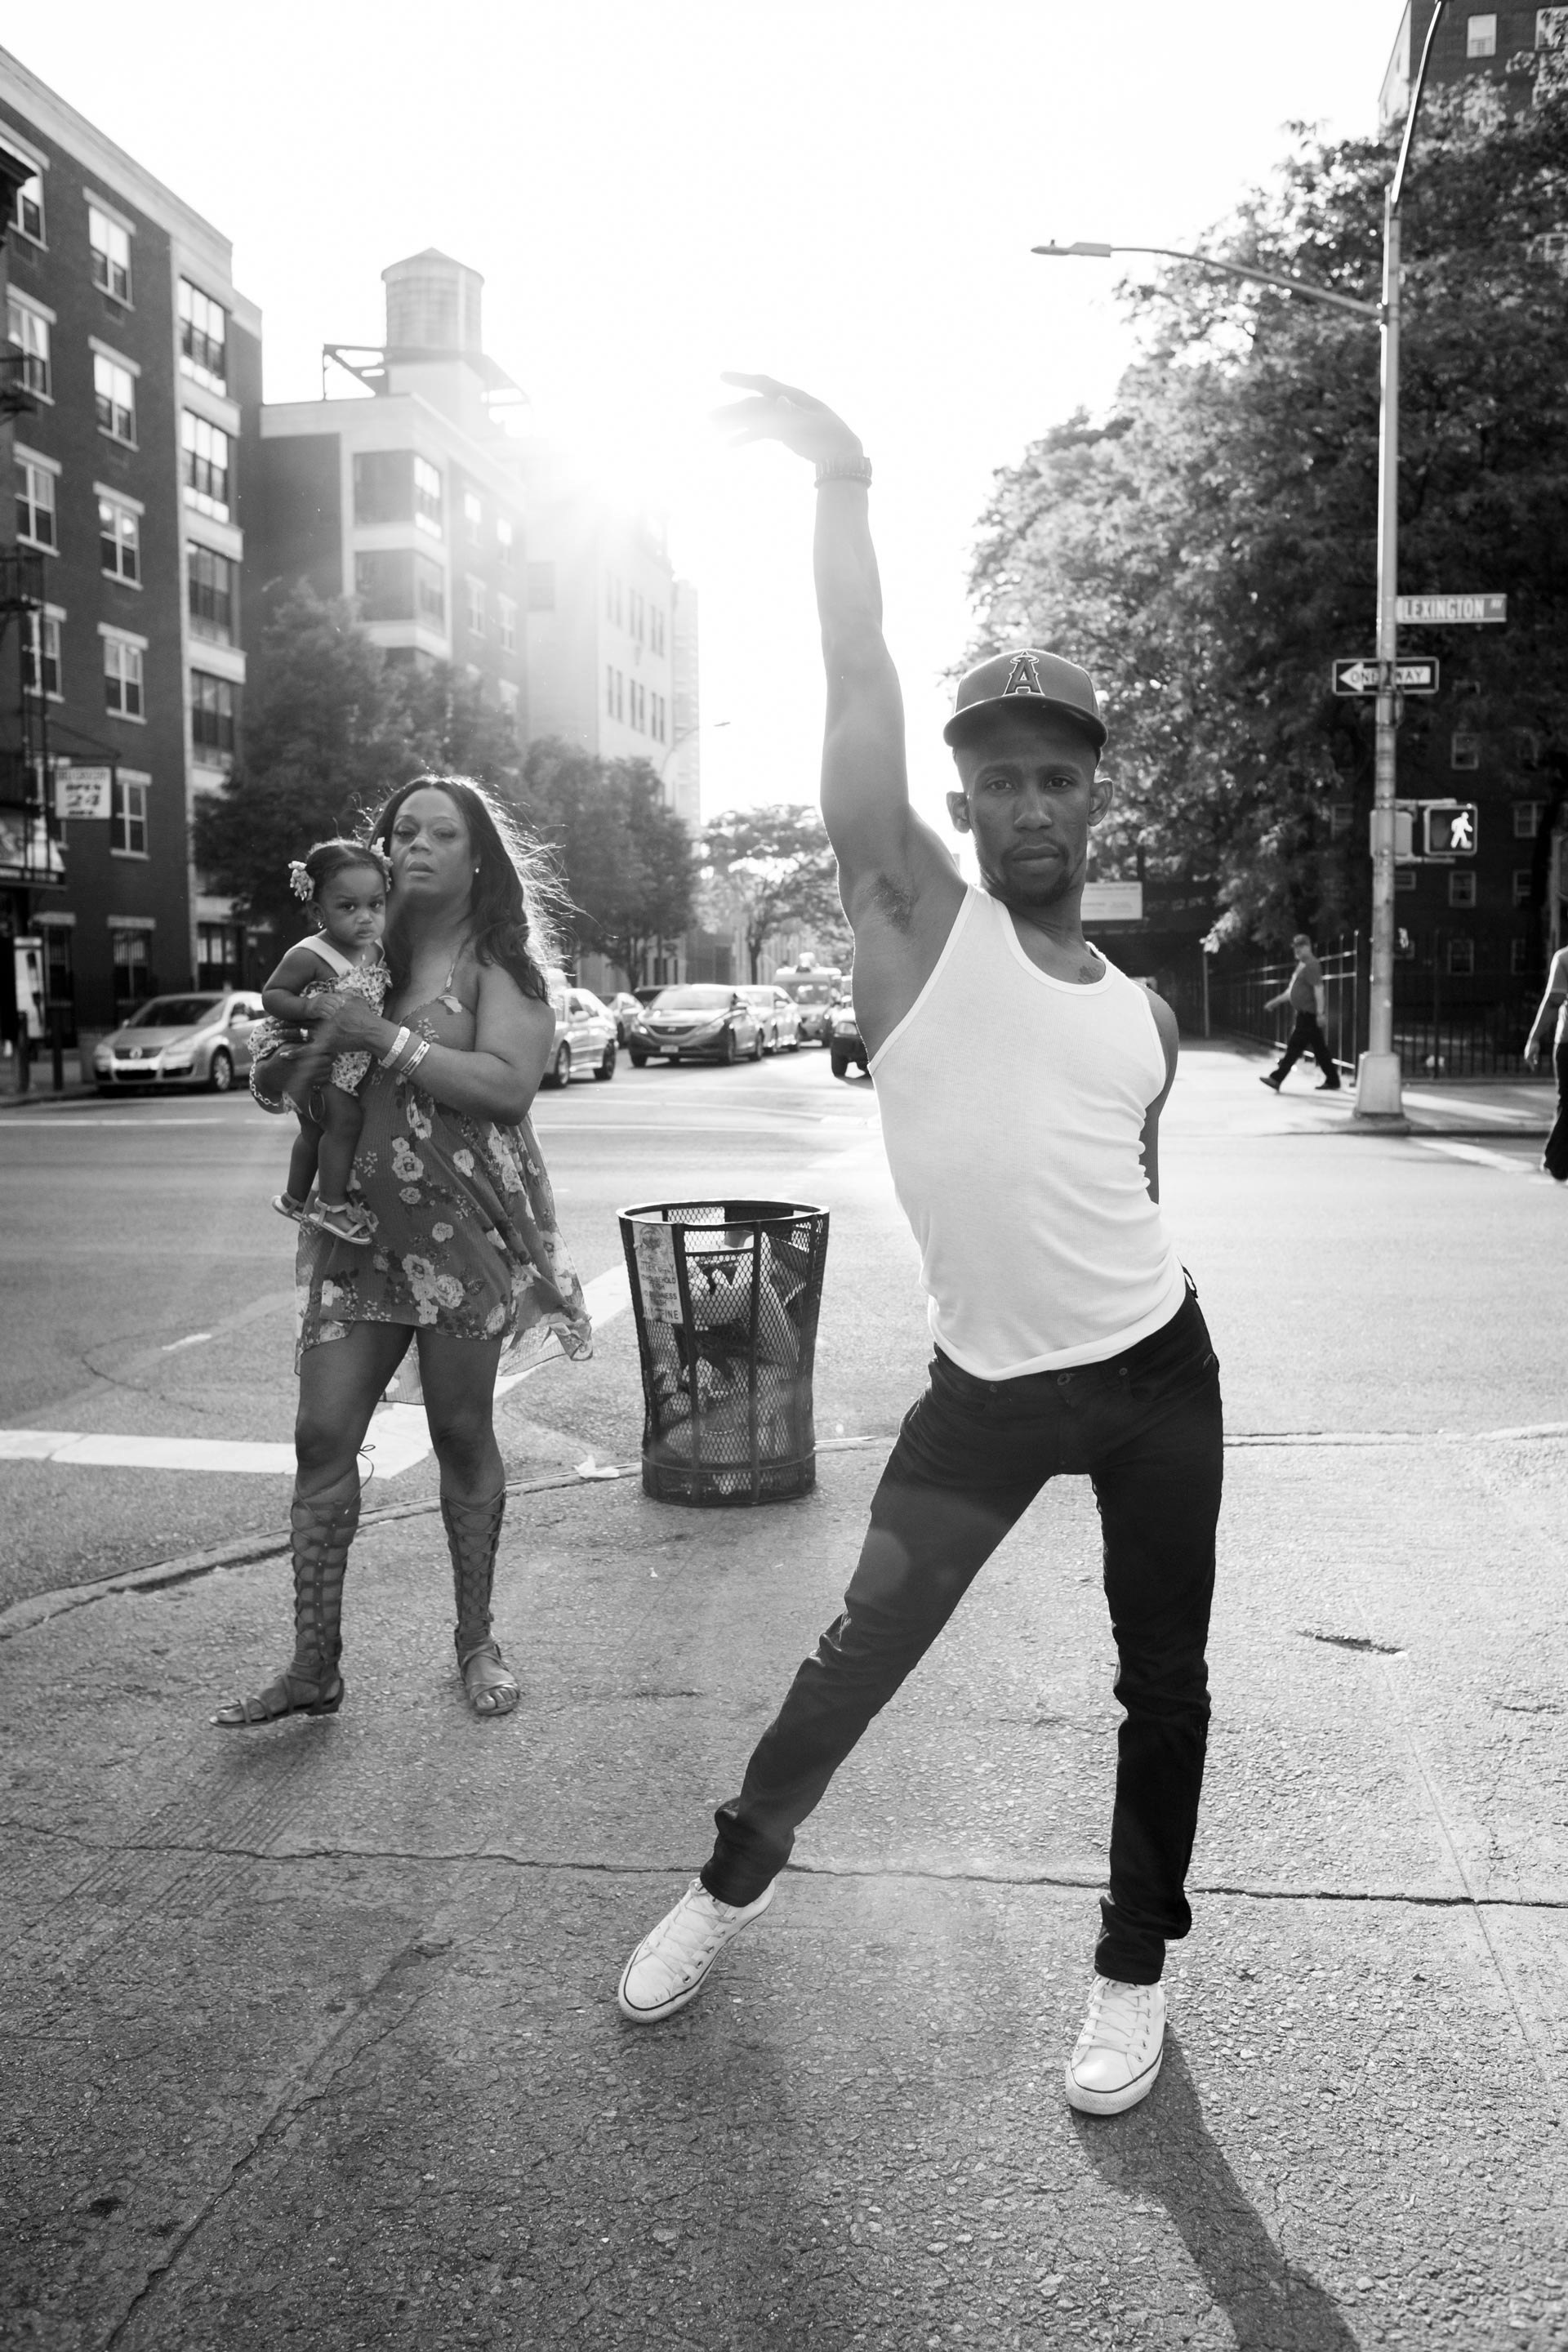 Derek Auguste strikes a vogue pose on Lexington Avenue in East Harlem, NY.